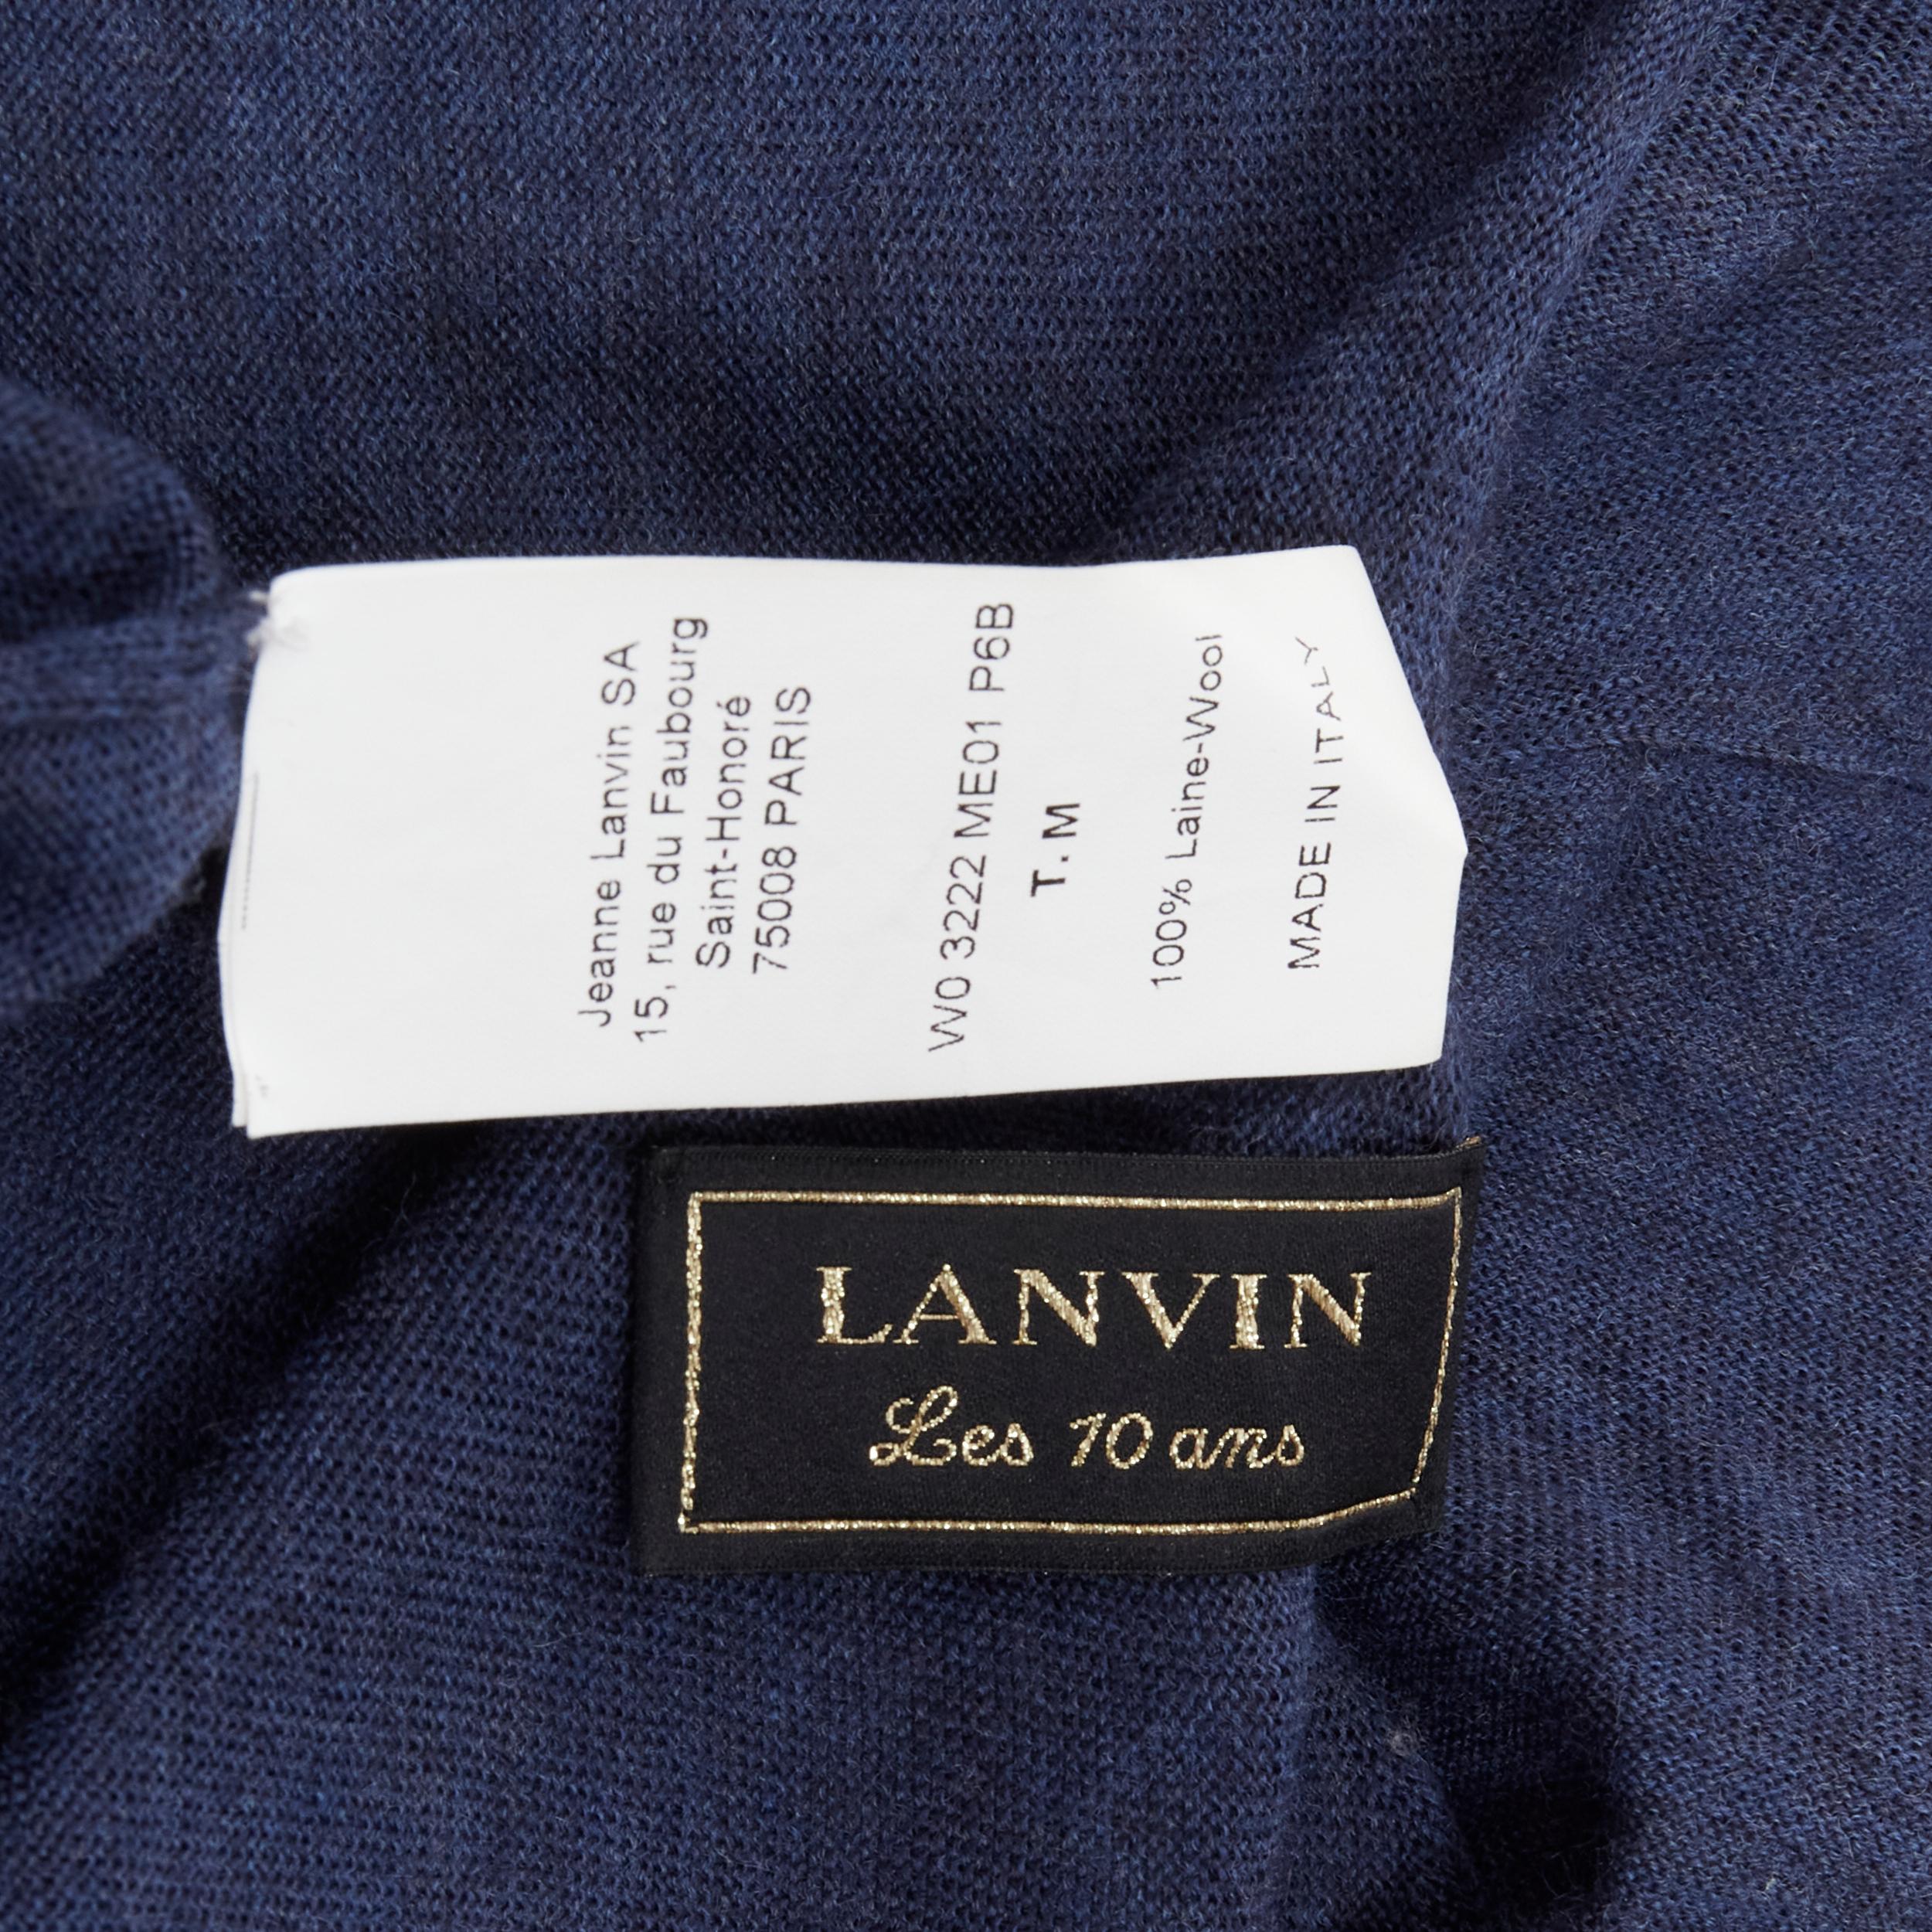 LANVIN Alber Elbaz Les 10 Ans 100% wool wrap neckline knitted dress S 6